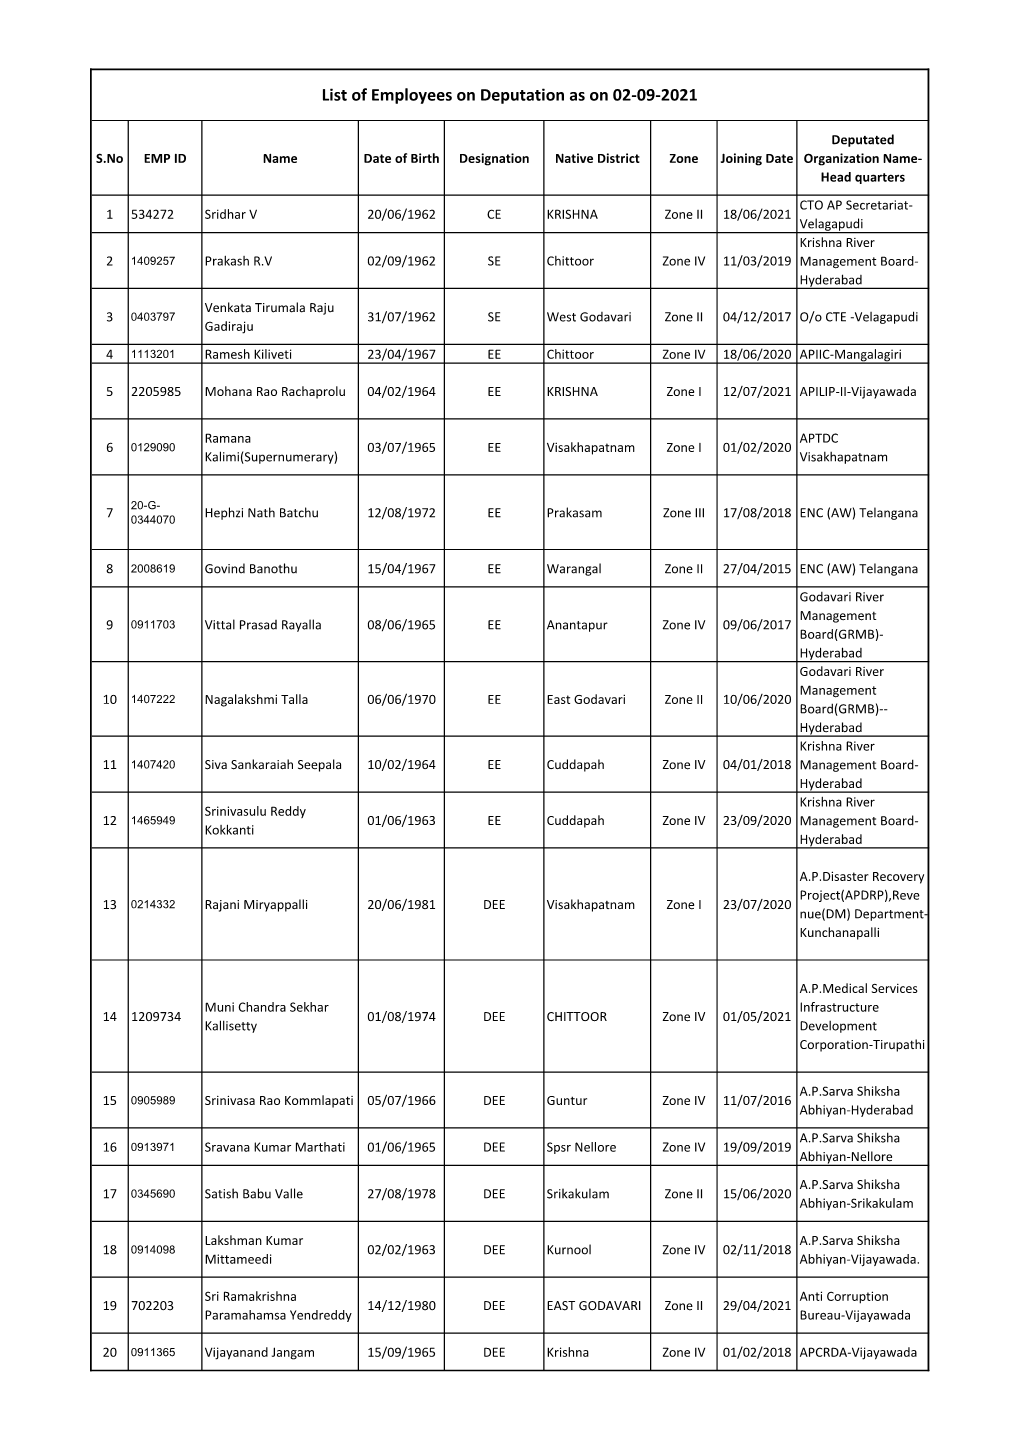 List of Employees on Deputation As on 02-09-2021